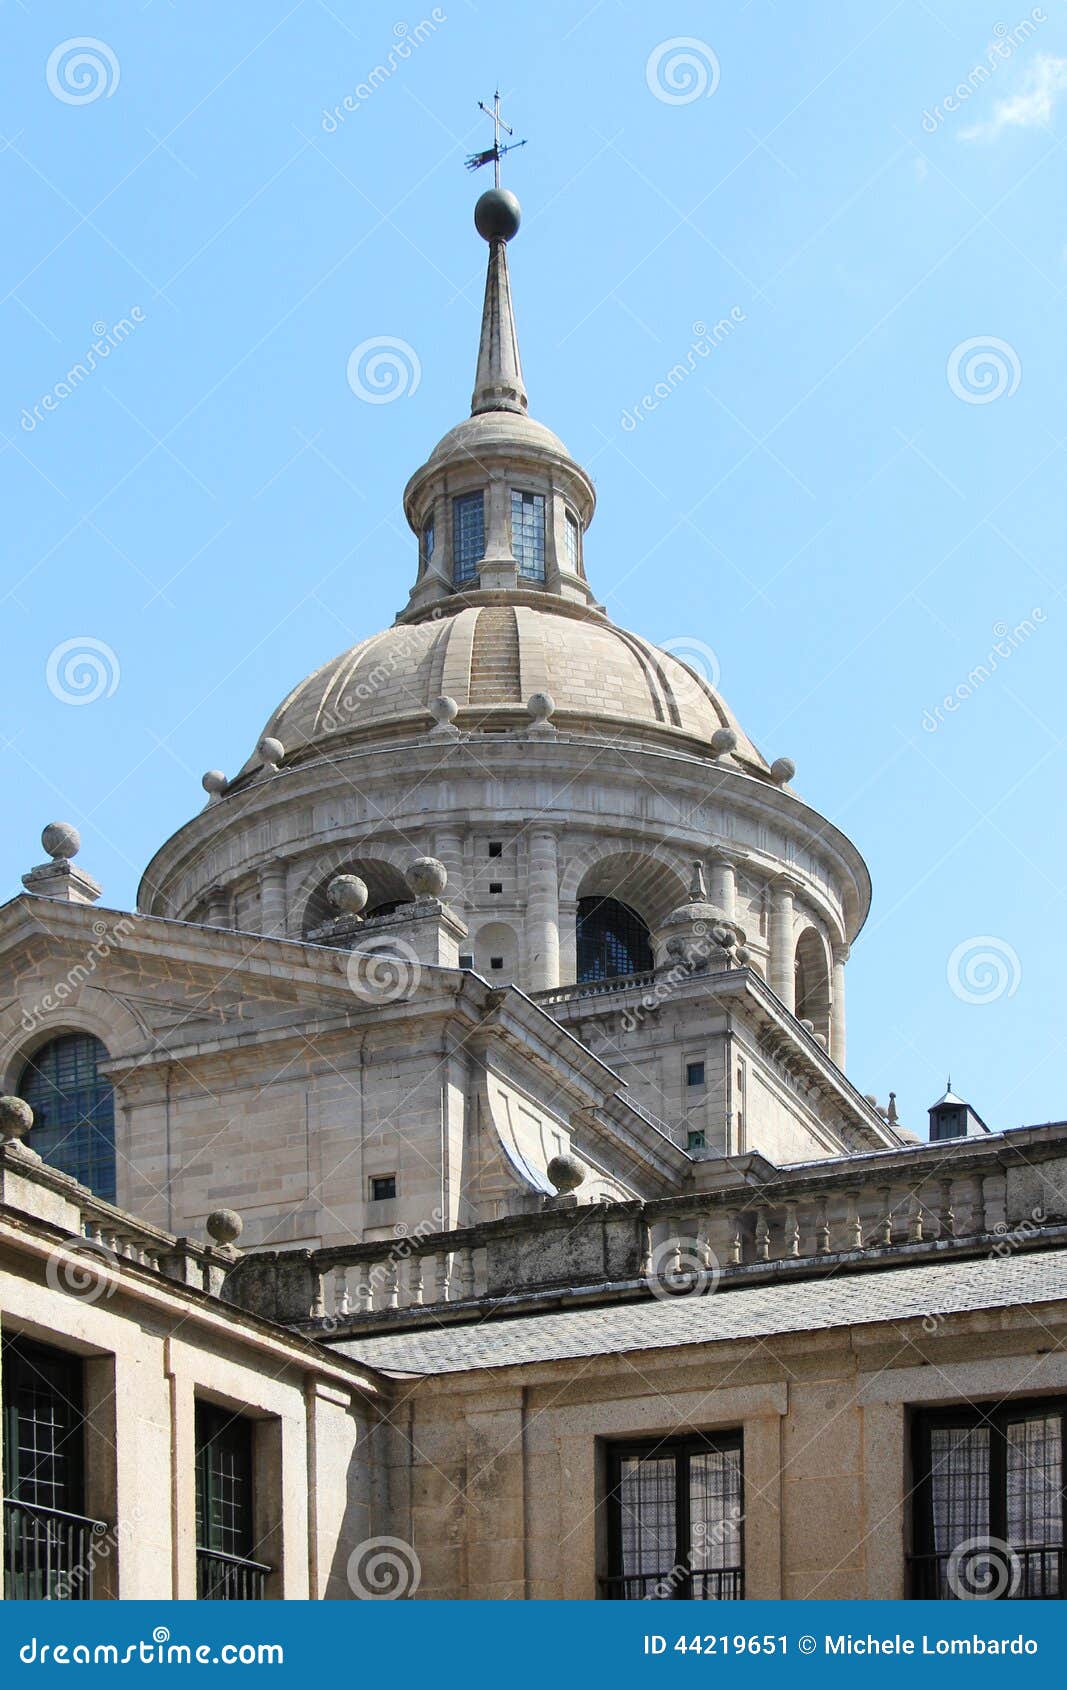 el escorial, madrid, the dome